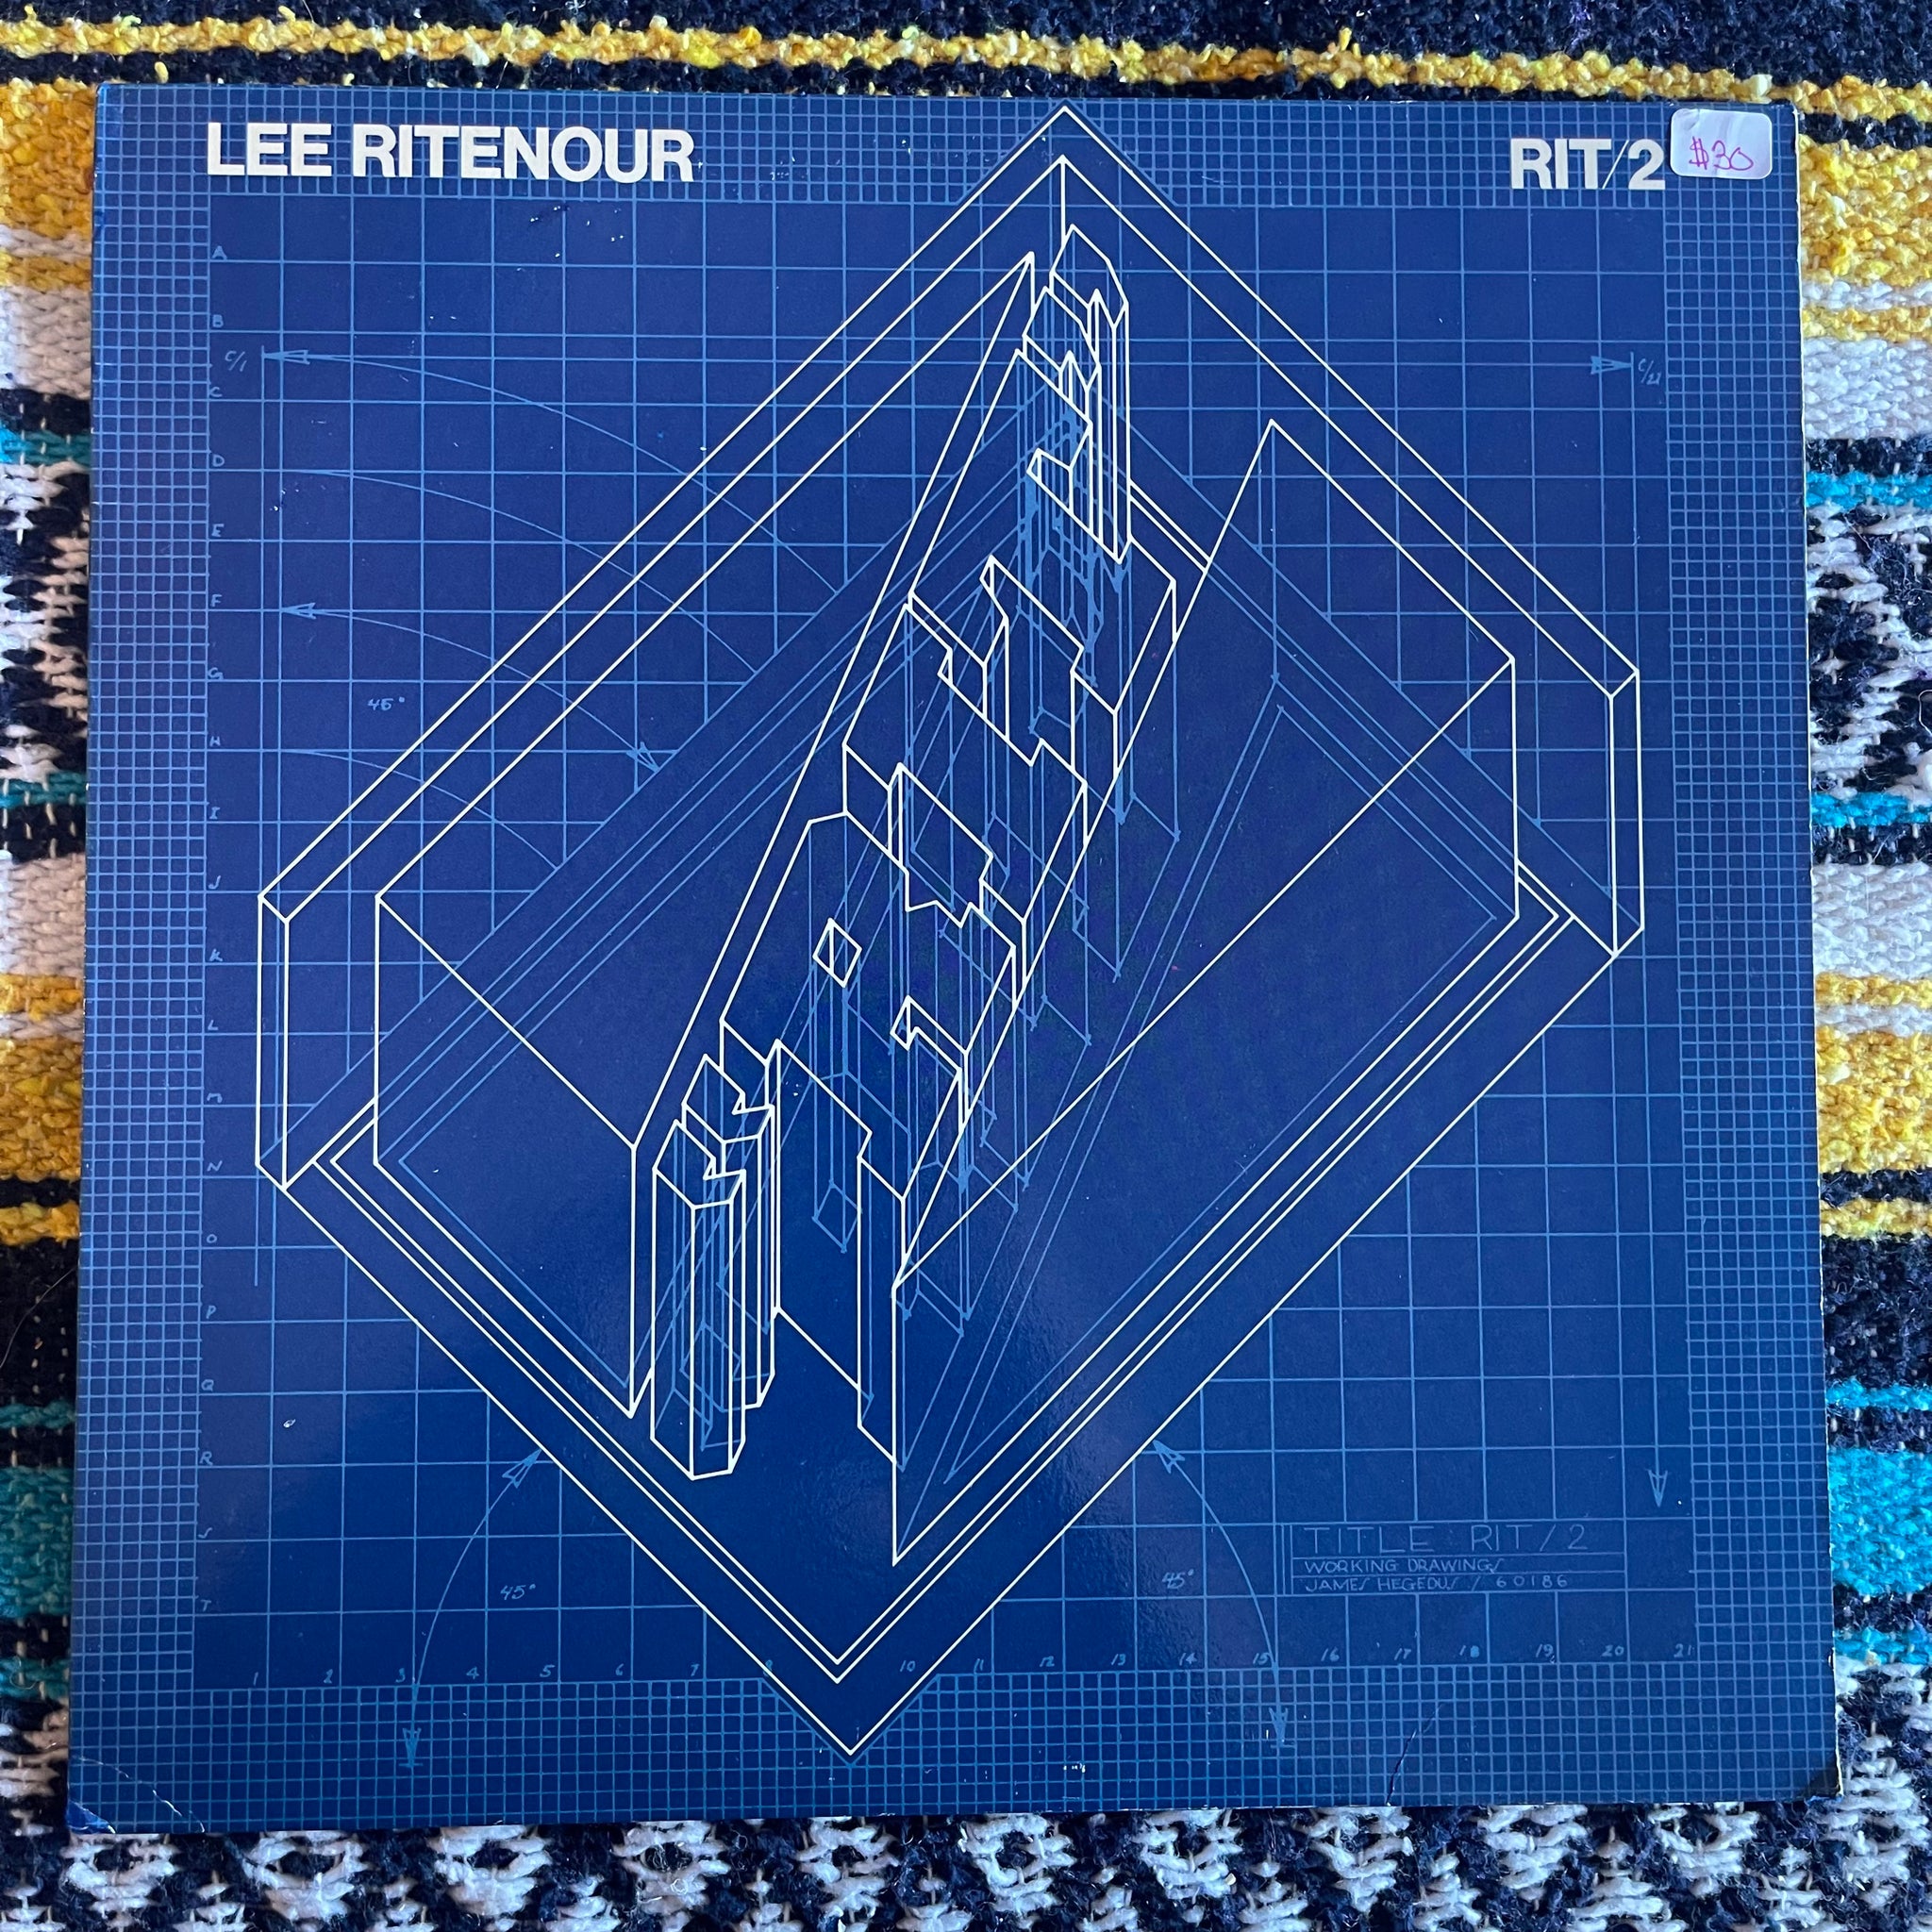 Lee Ritenour-Rit/2